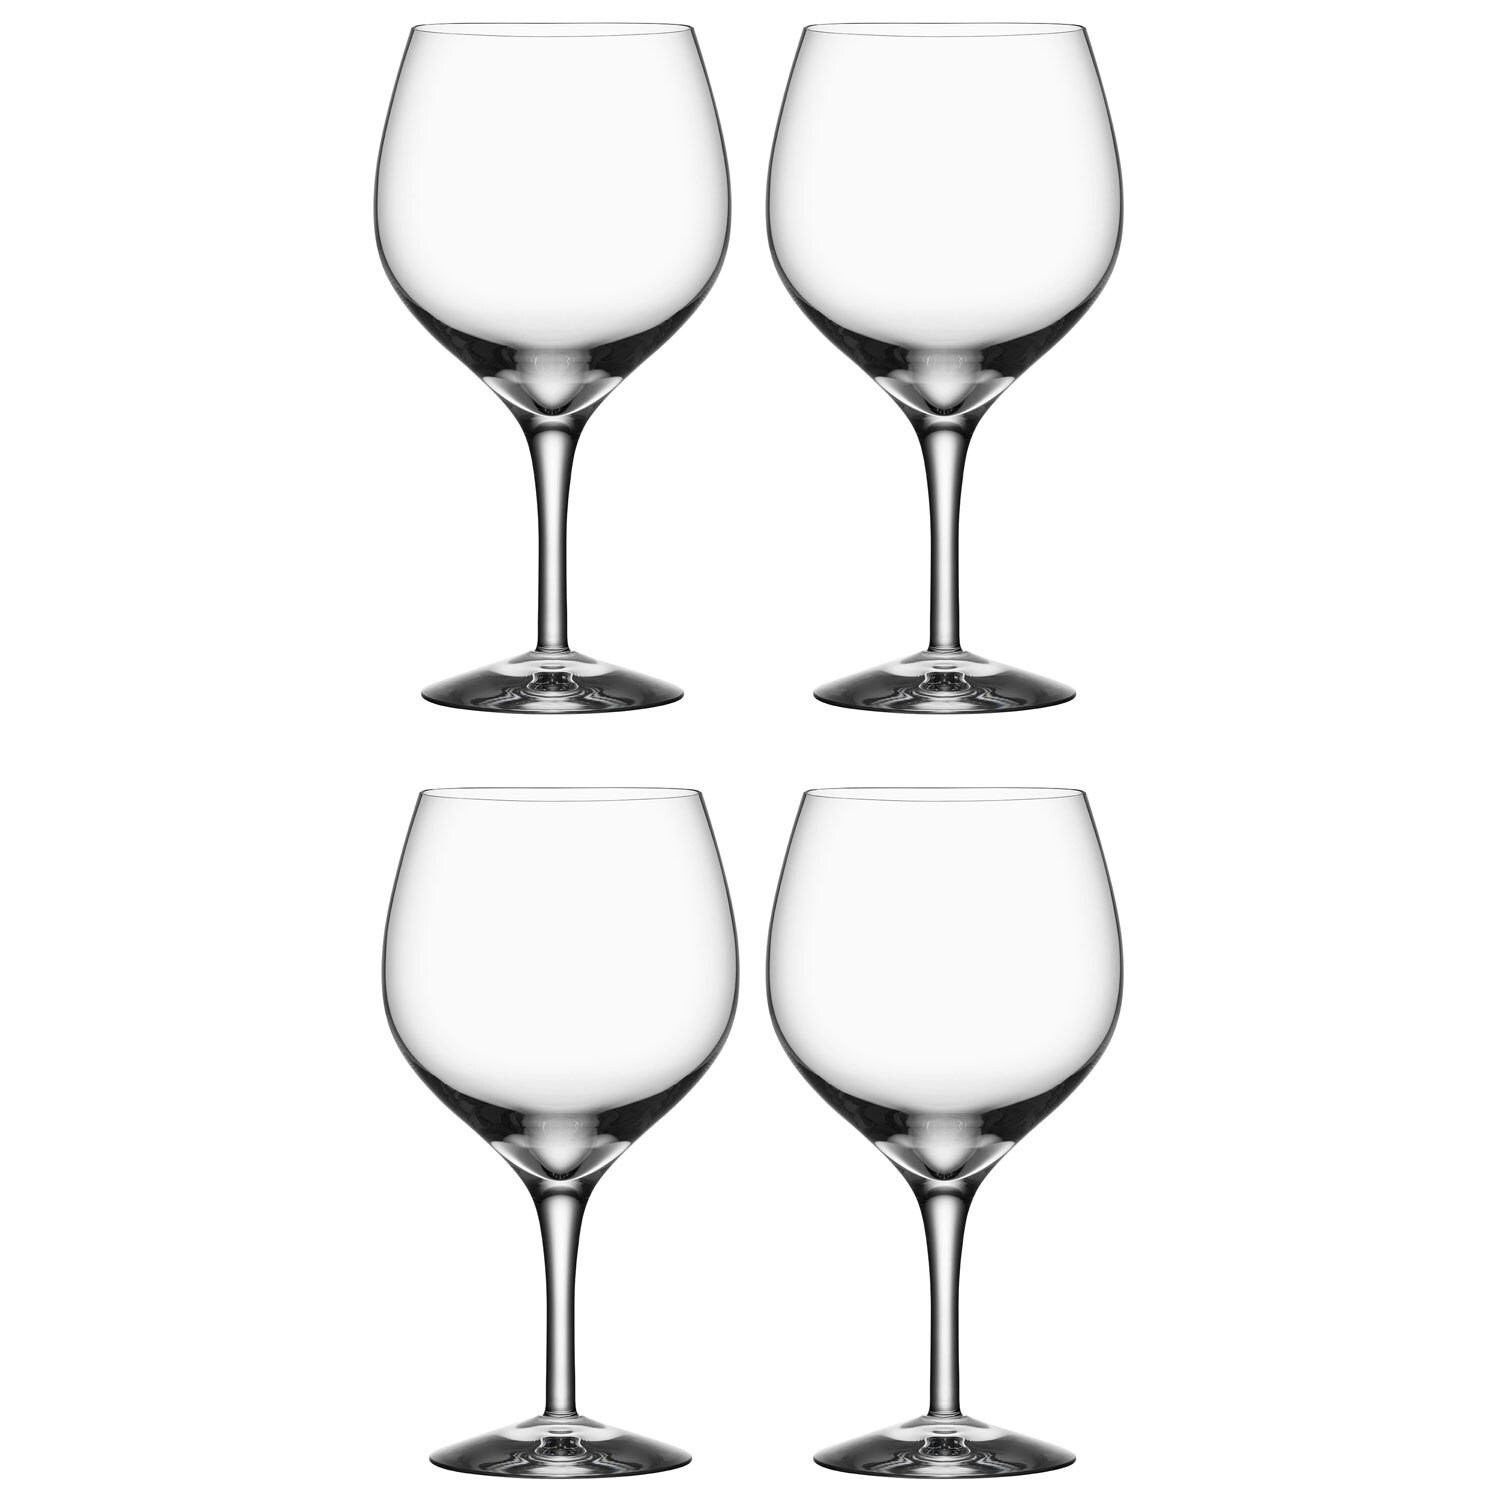 https://royaldesign.com/image/2/orrefors-gin-tonic-glass-64-cl-4-pcs-0